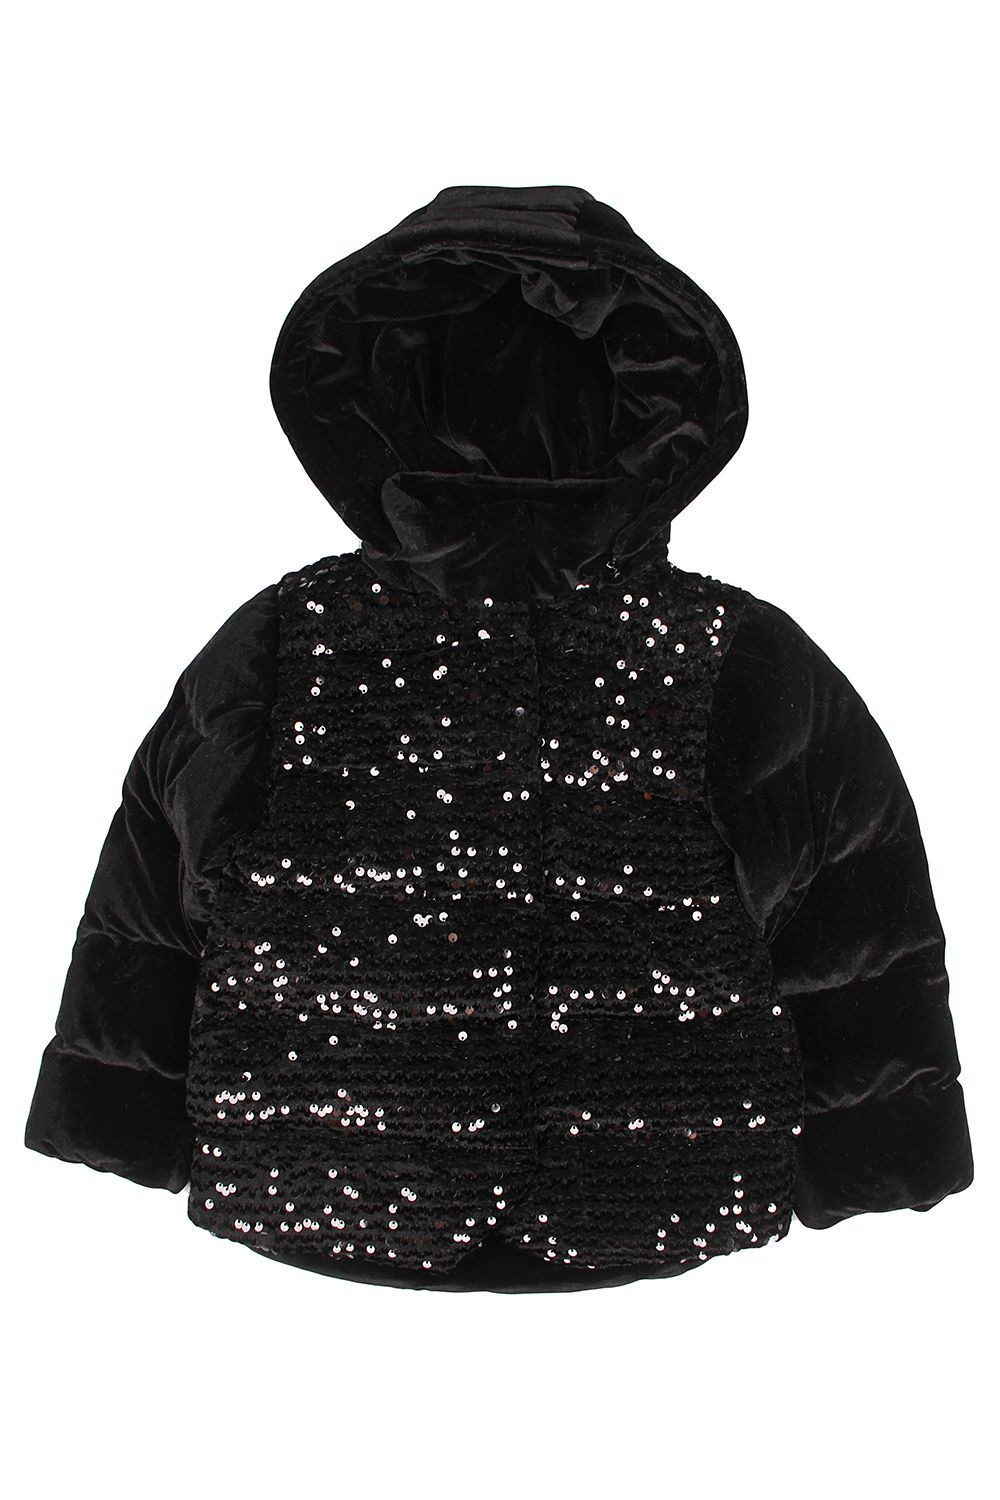 Куртка To Be Too, размер 98, цвет черный - фото 2